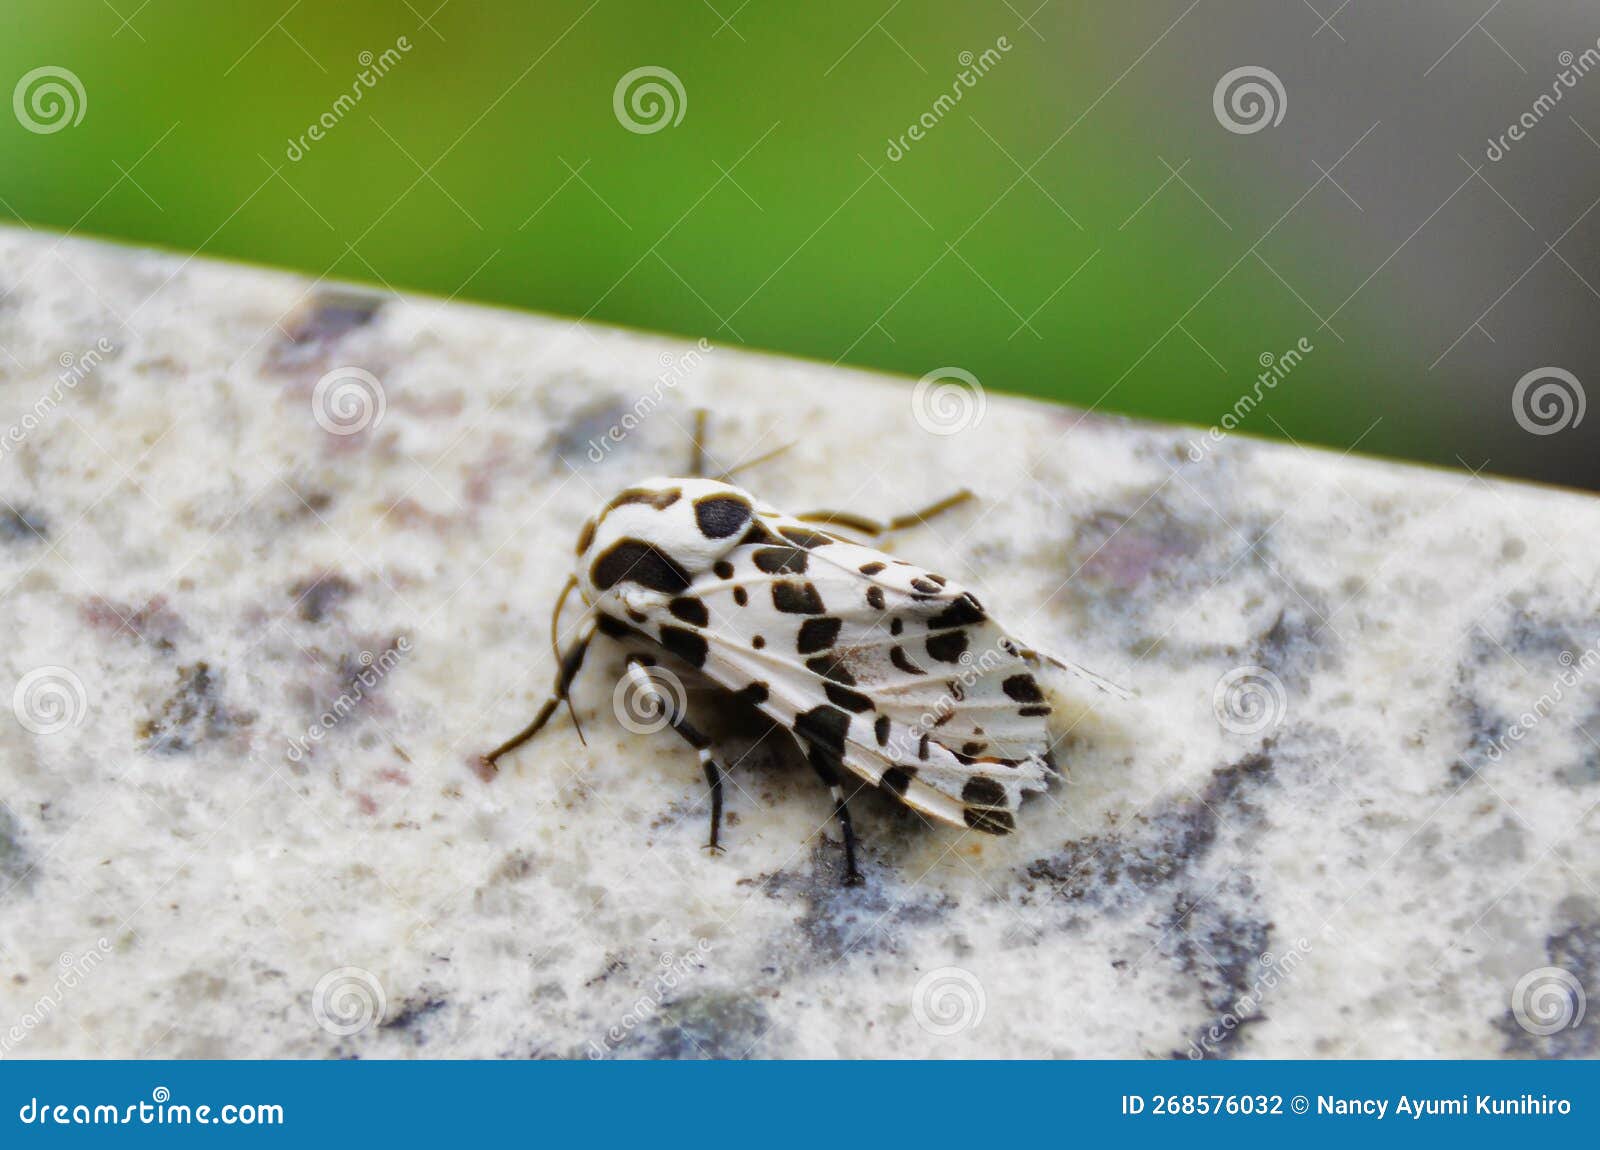 a white hypercompe scribonia moth with black